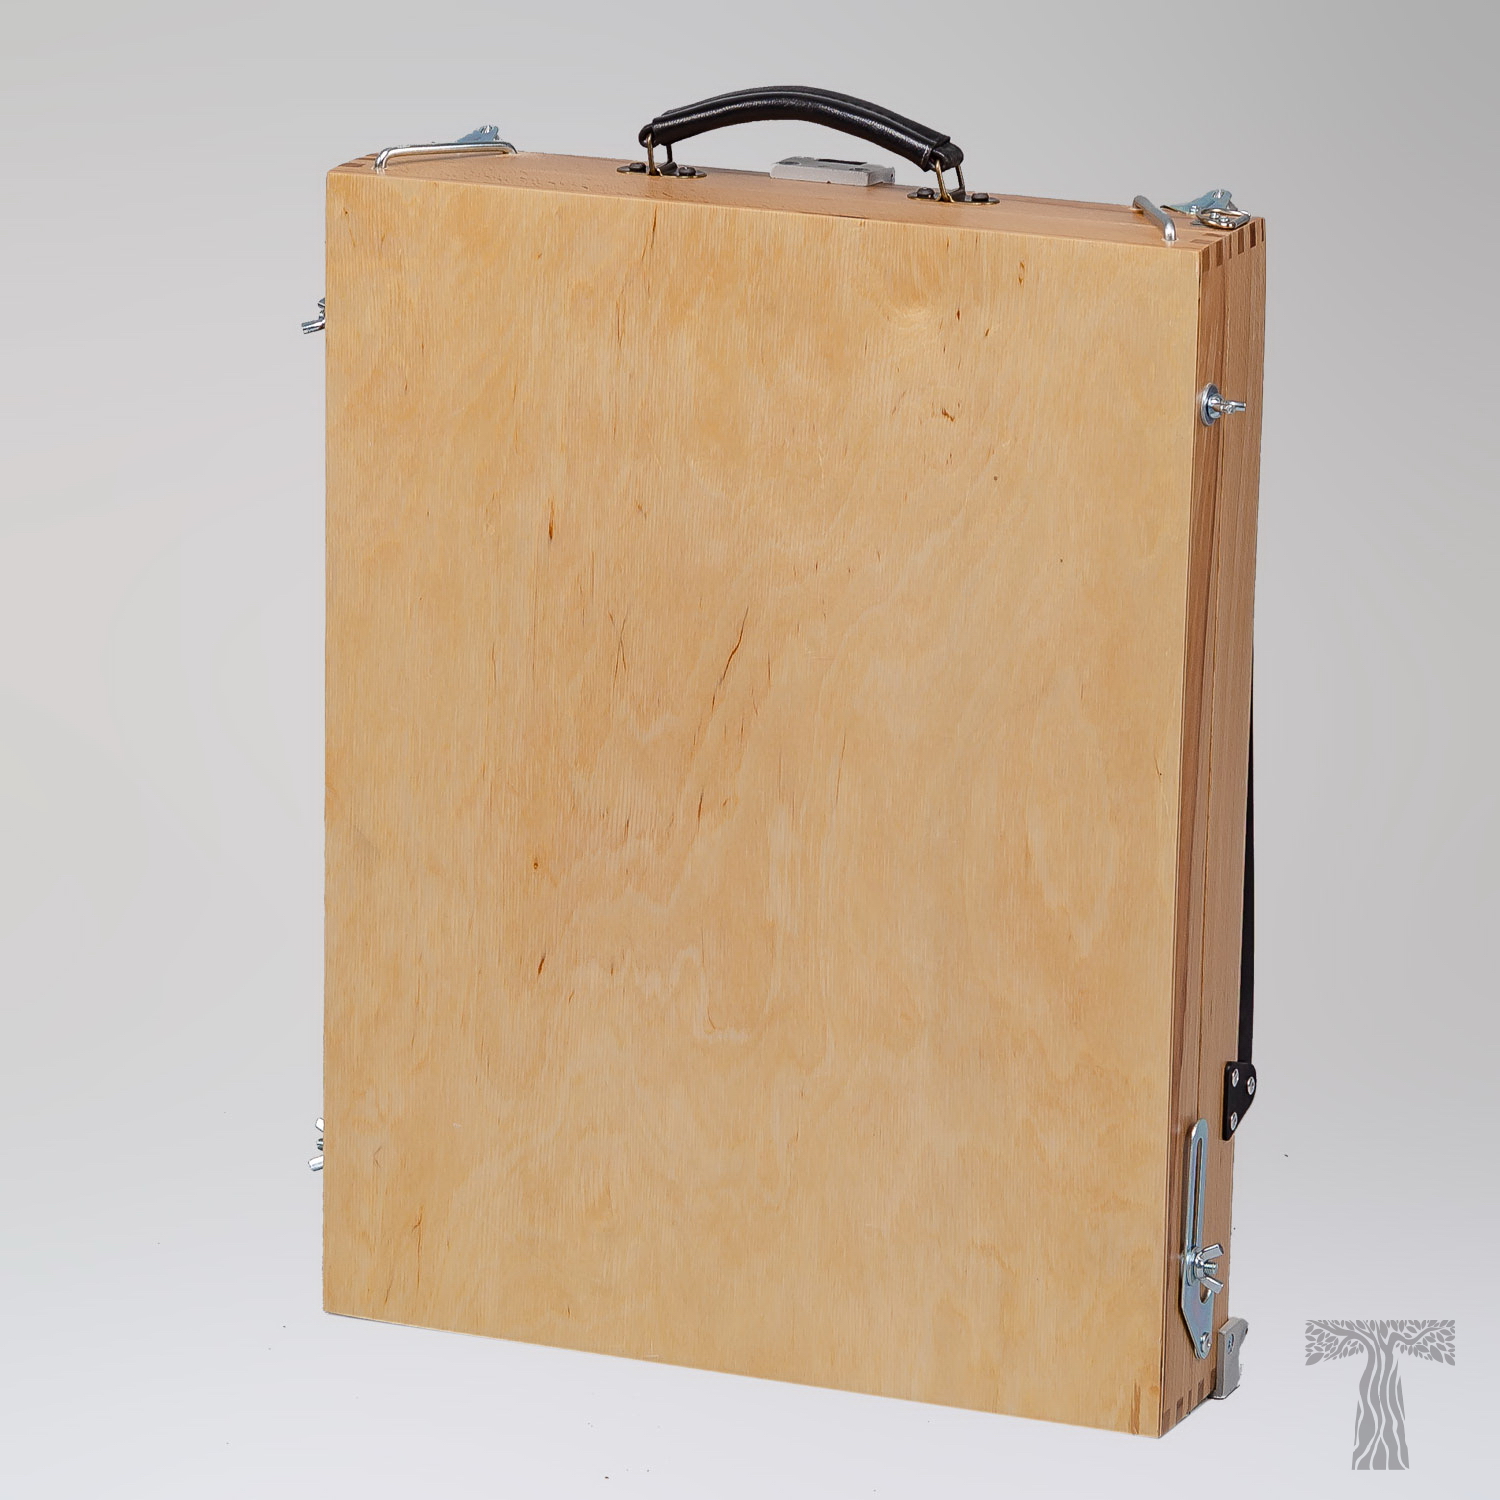 Portable easel, French pochade box,portable easel IMPainter Tart